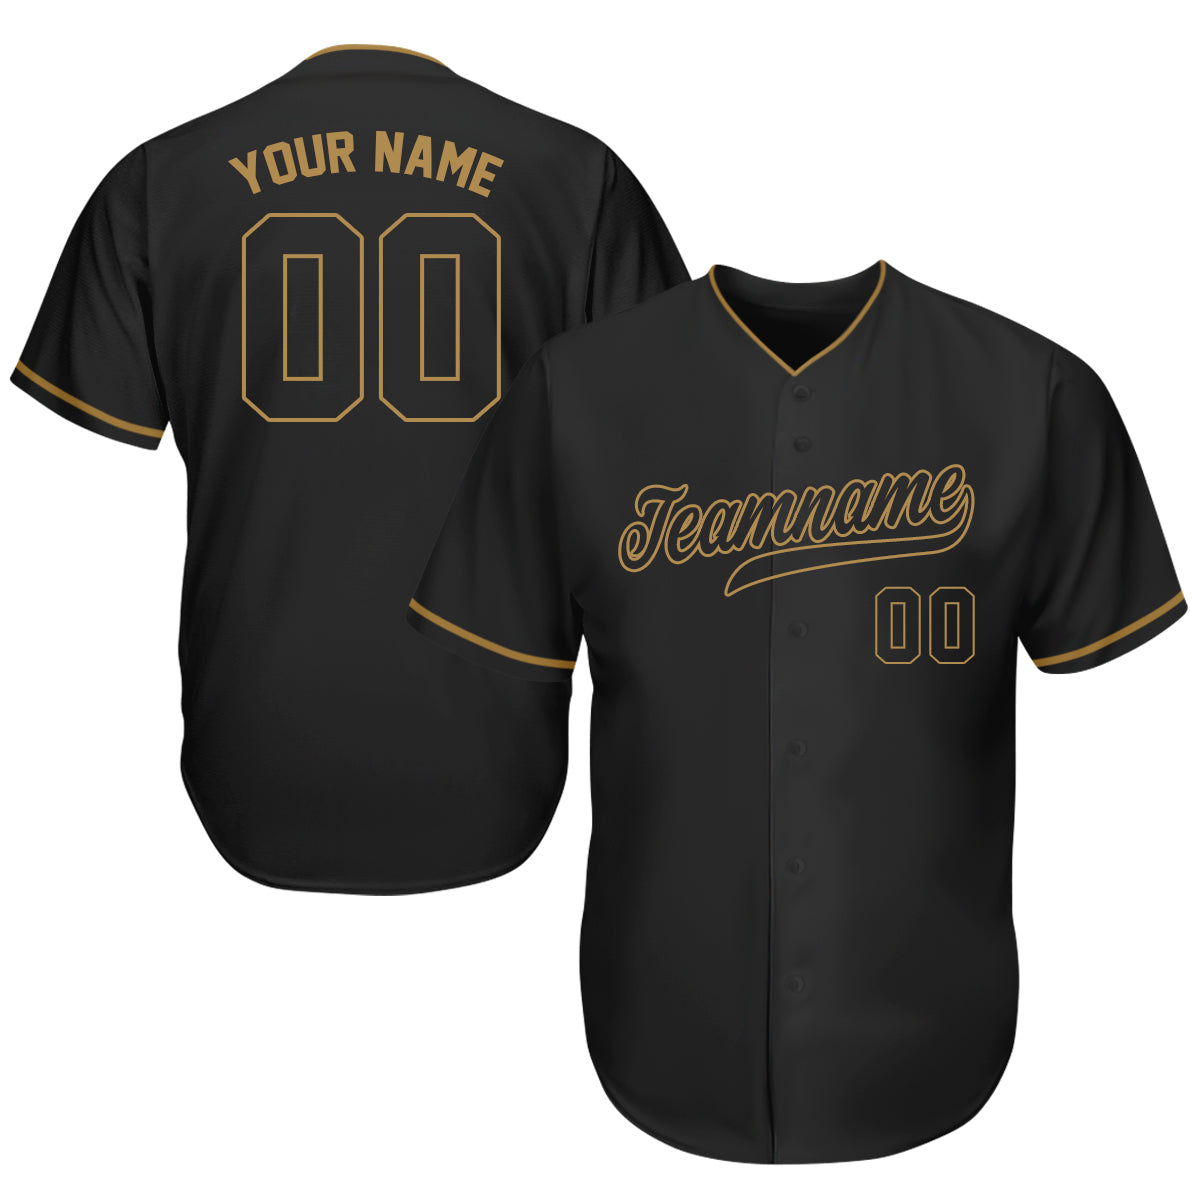  Custom Baseball Orange White T Shirt Shirts Personalized Name  Number, Gift for Sport Fans Men Women Kids : Handmade Products